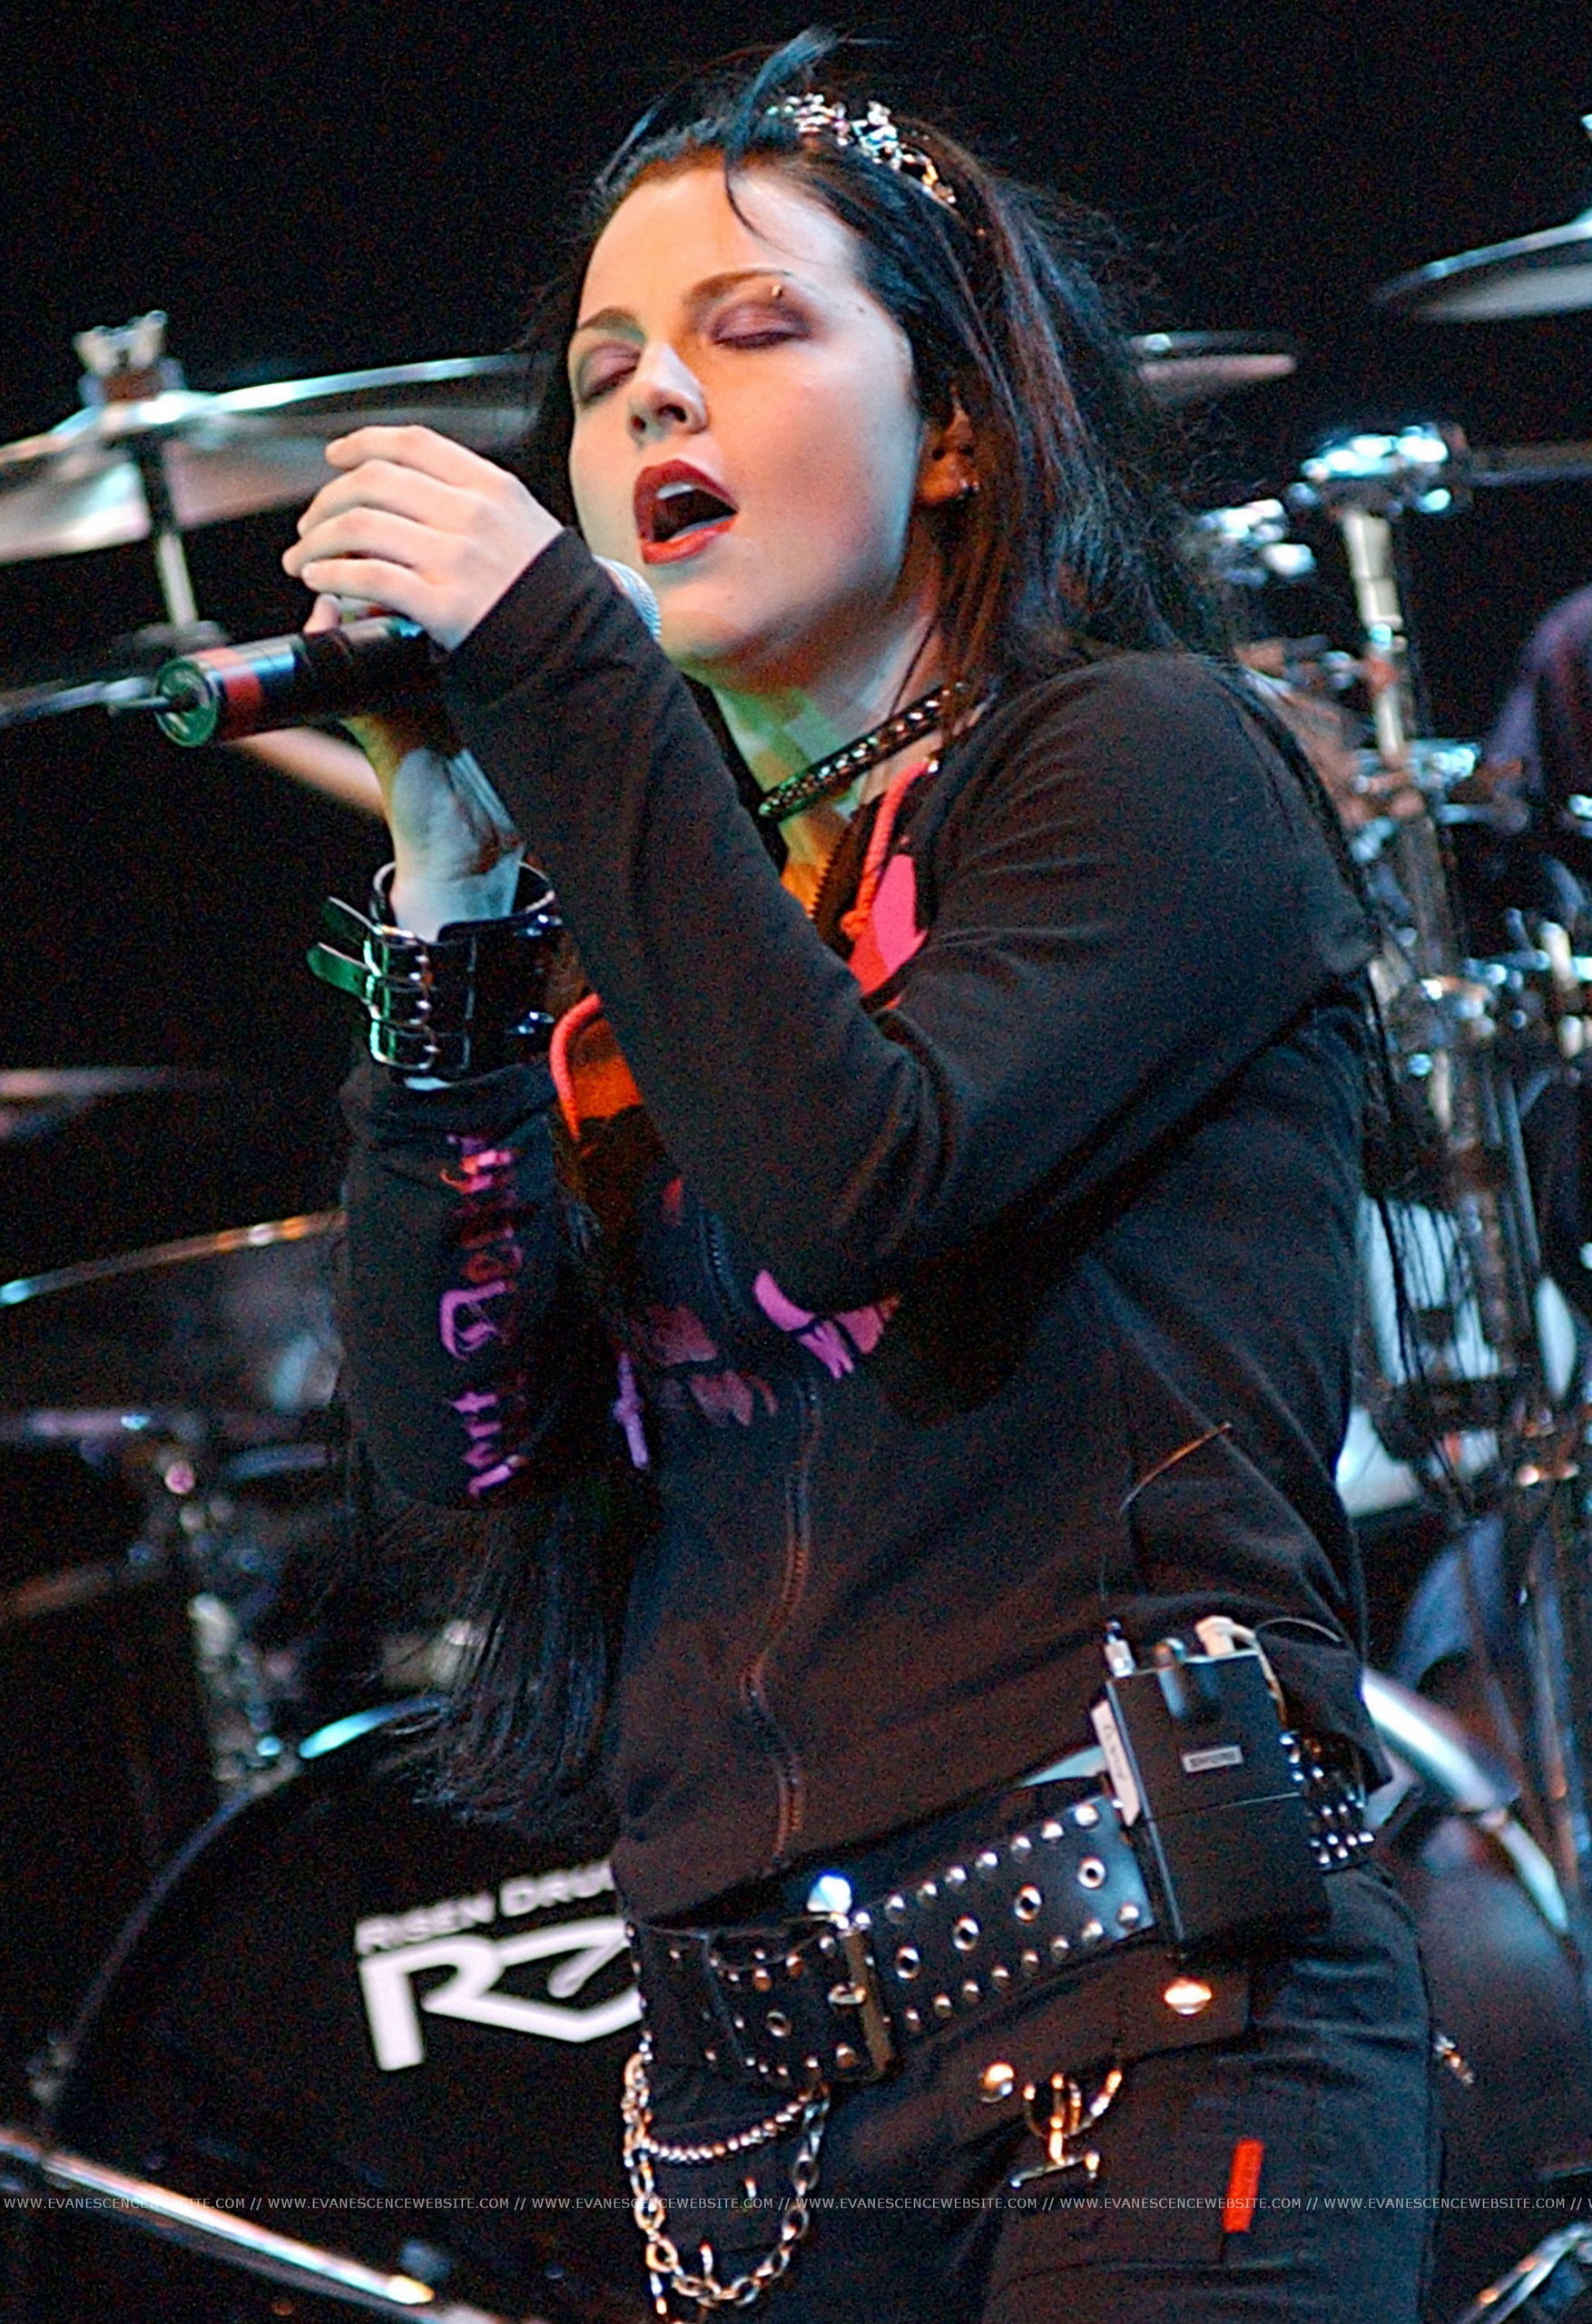 Queen Amy Evanescence Photo 21131972 Fanpop